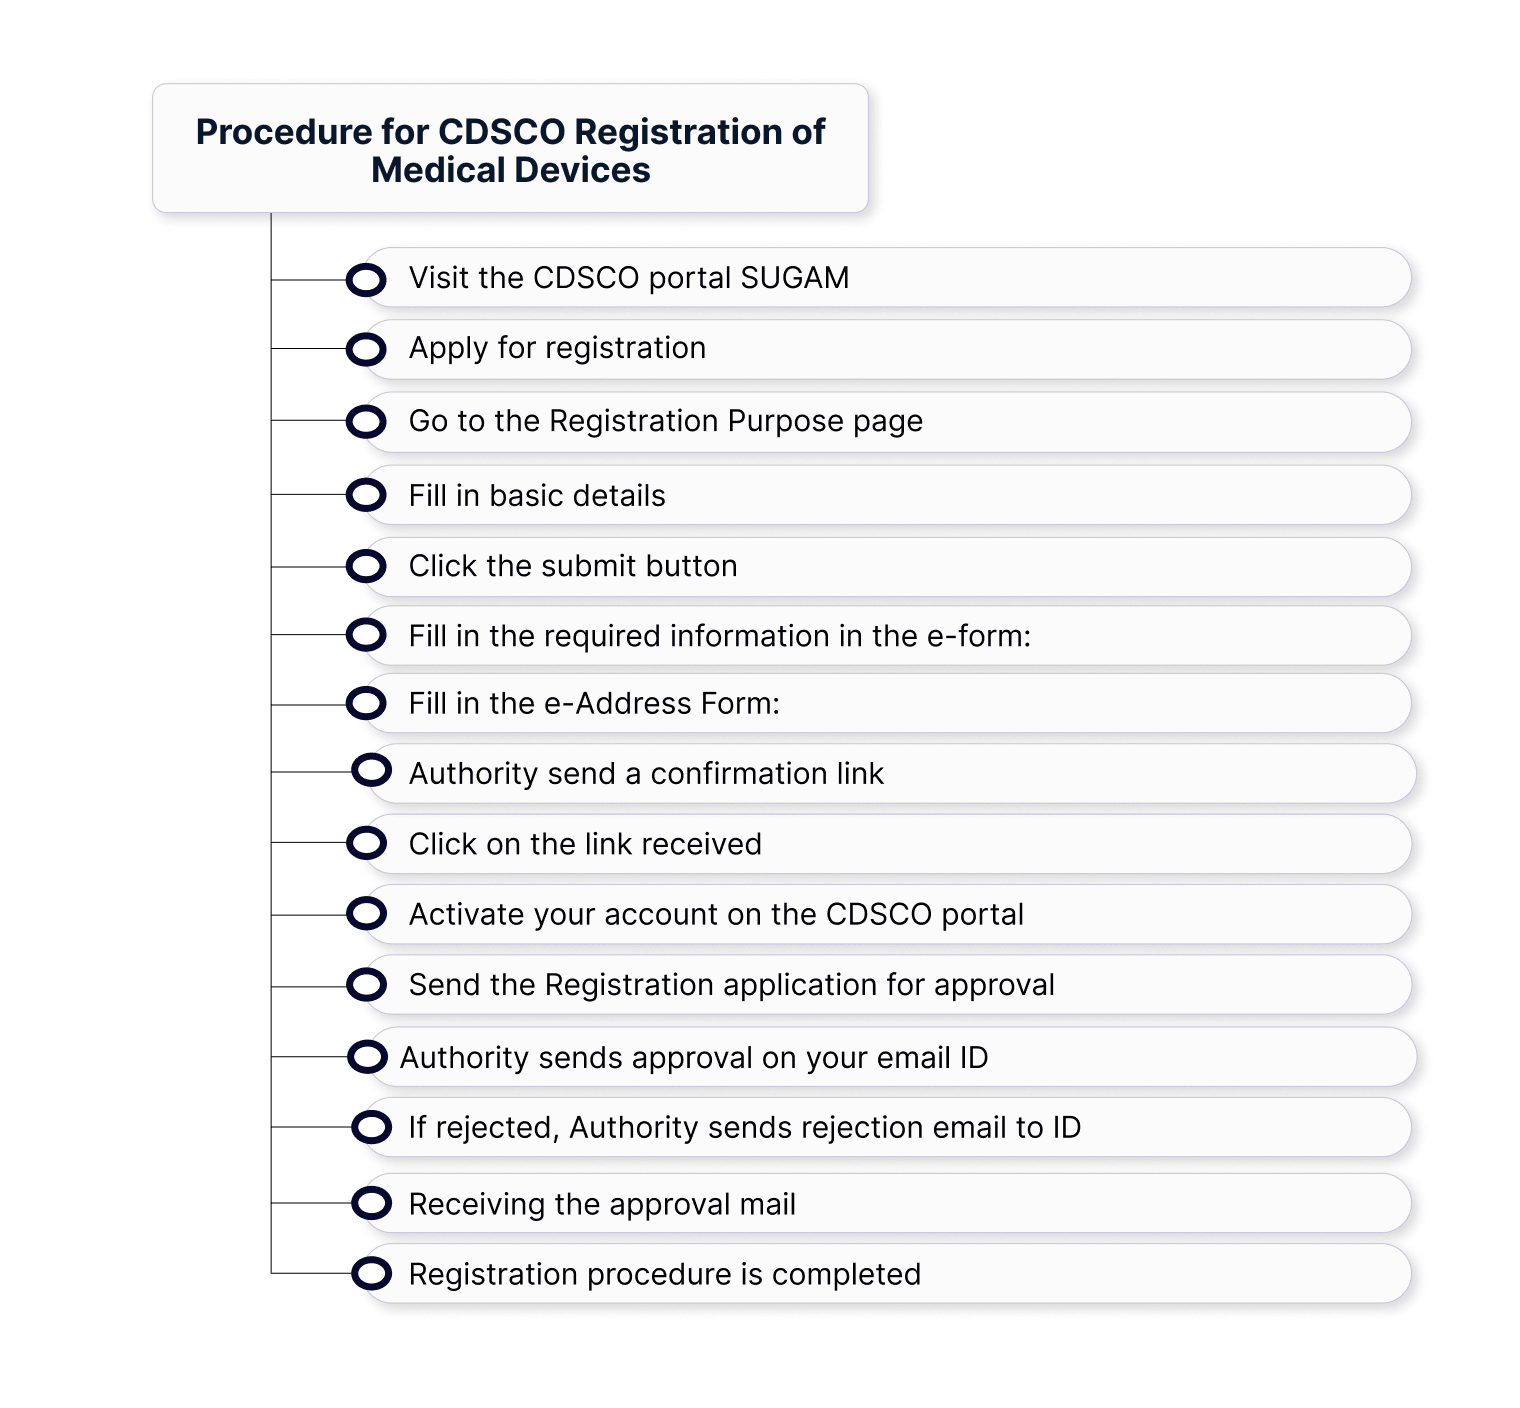 Procedure for CDSCO Registration of Medical Devices